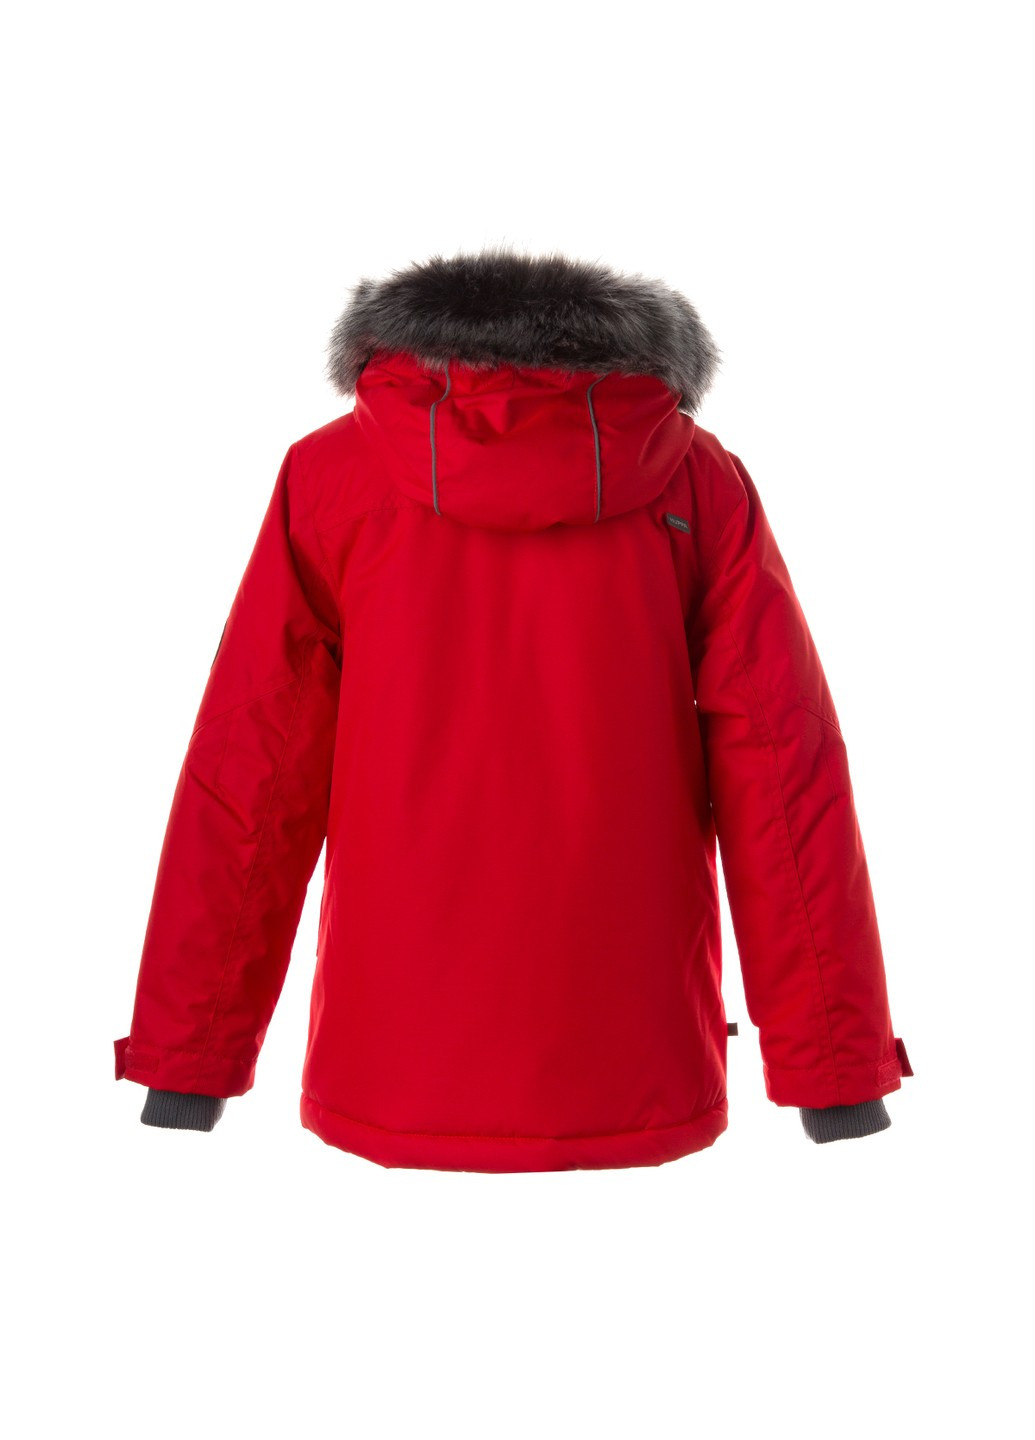 Красная зимняя куртка зимняя marten 2 Huppa